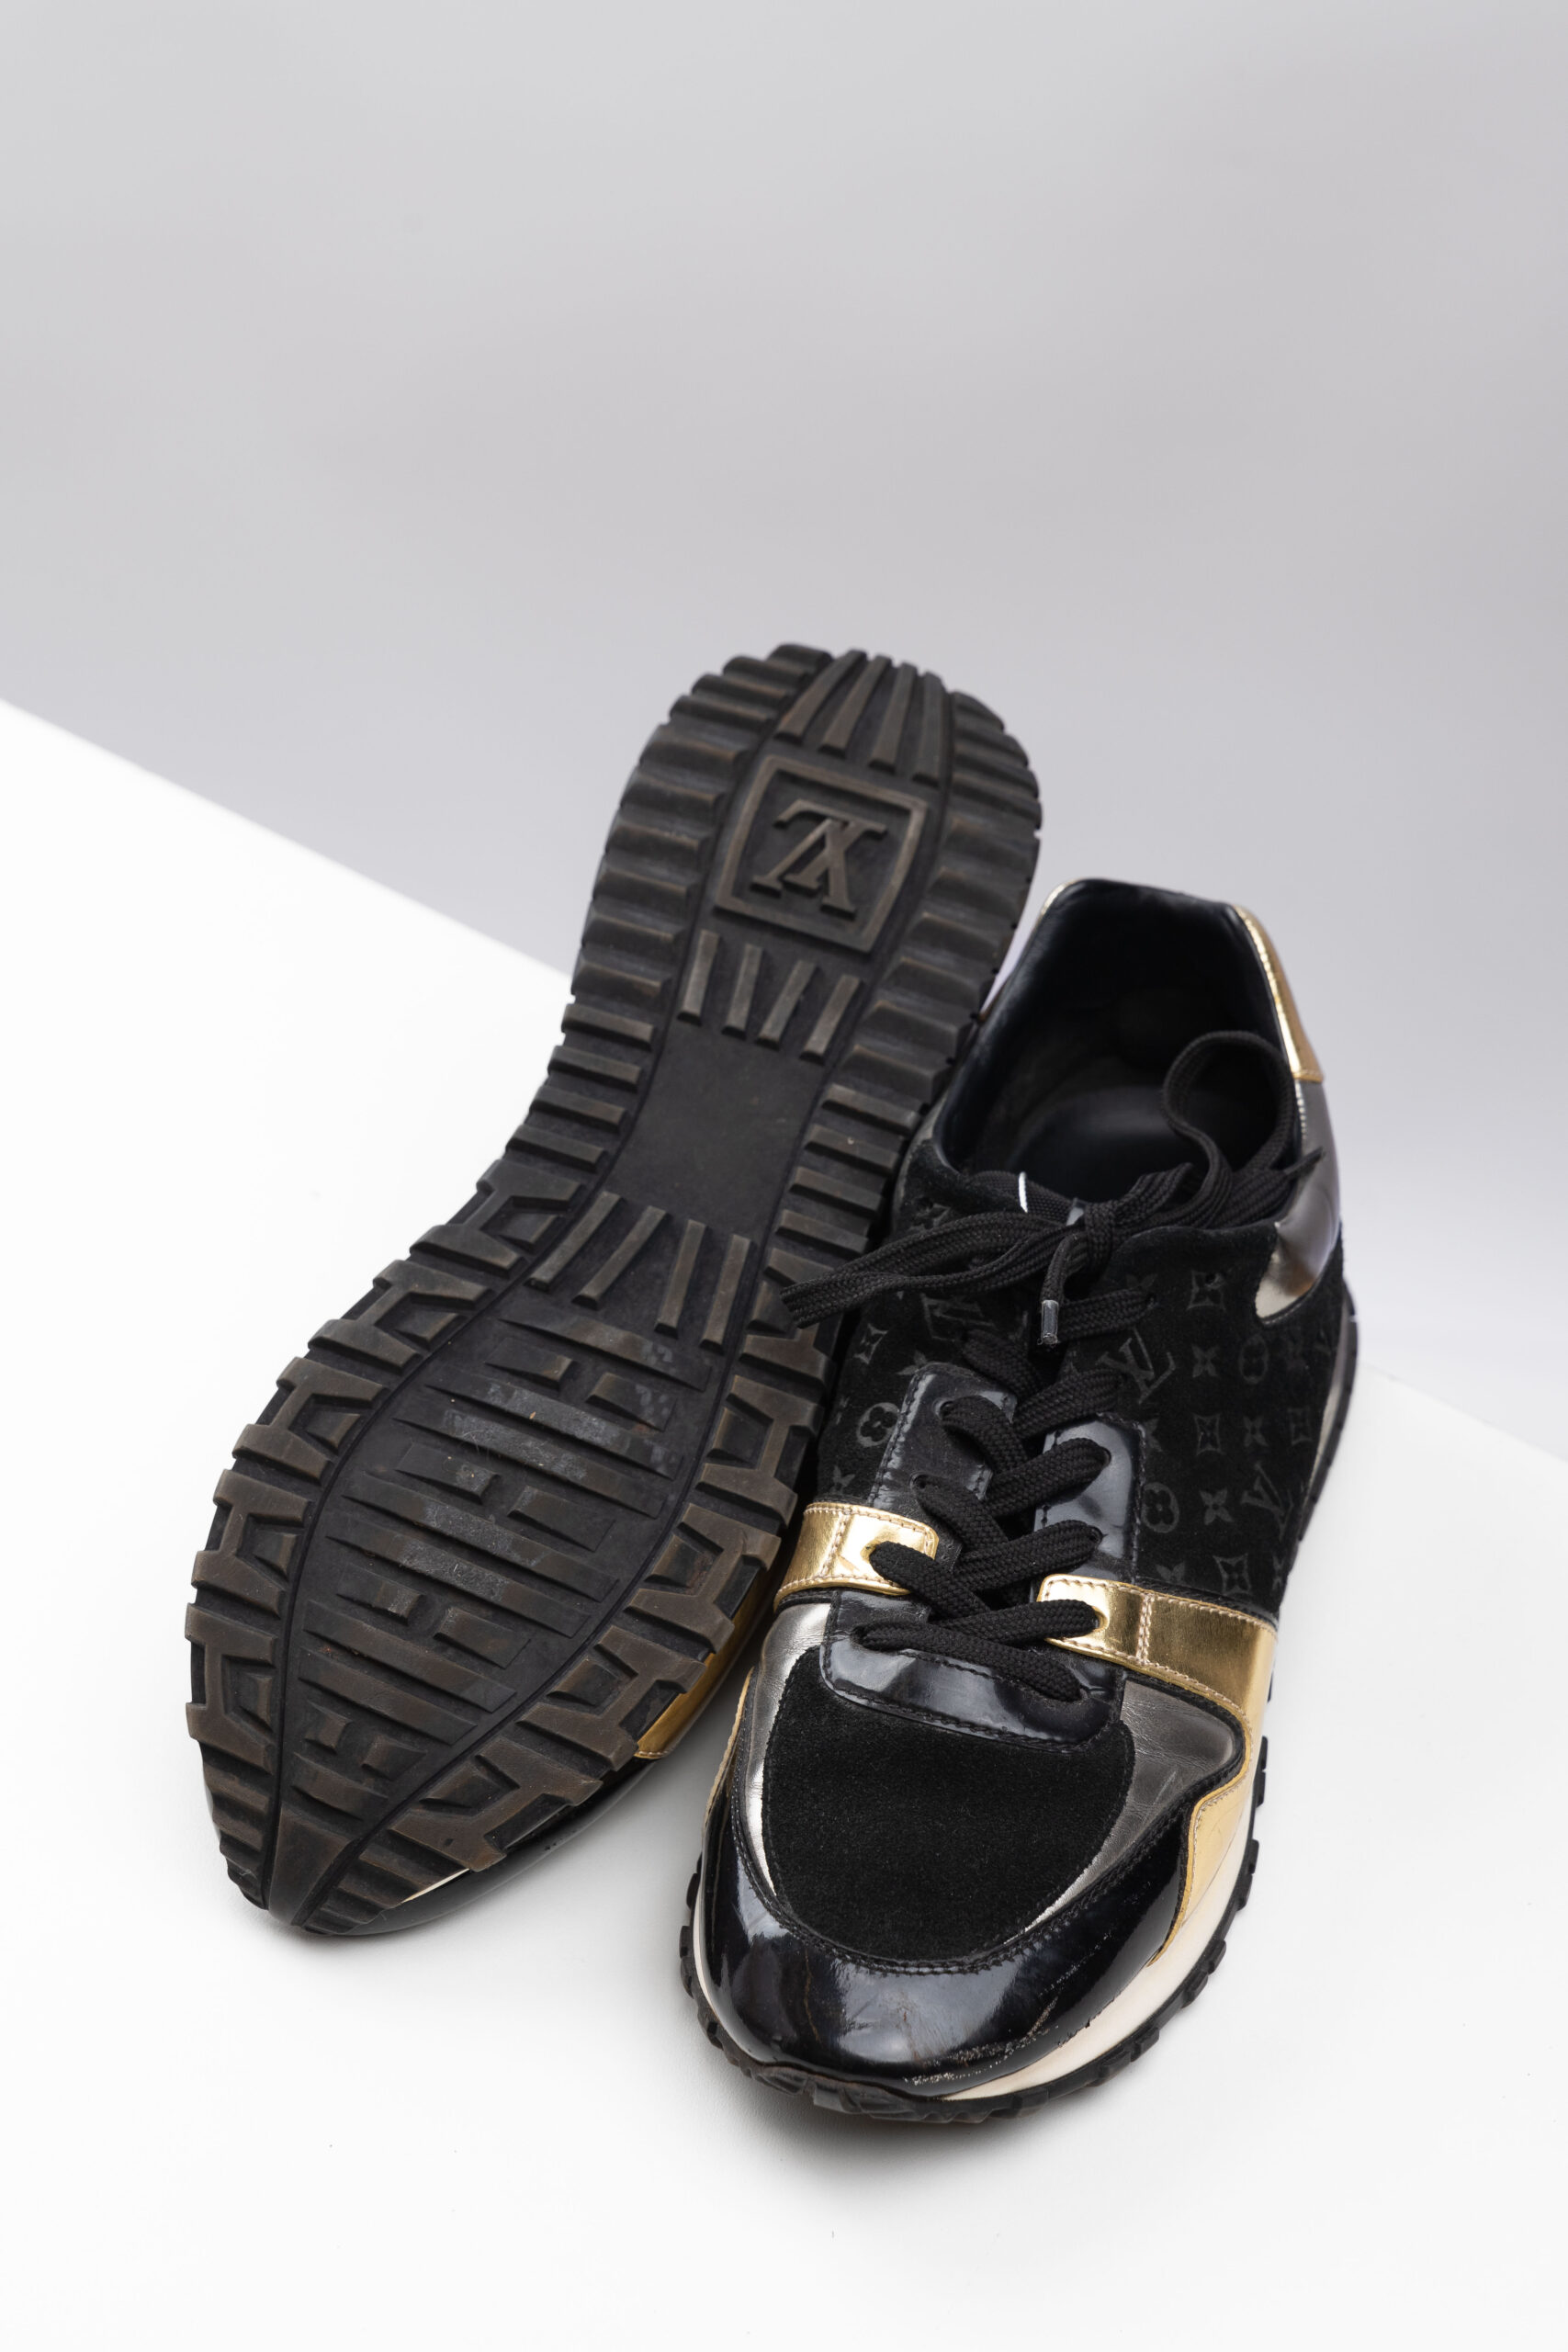 Tênis Louis Vuitton Monogram Sneakers Preto e Dourado 38